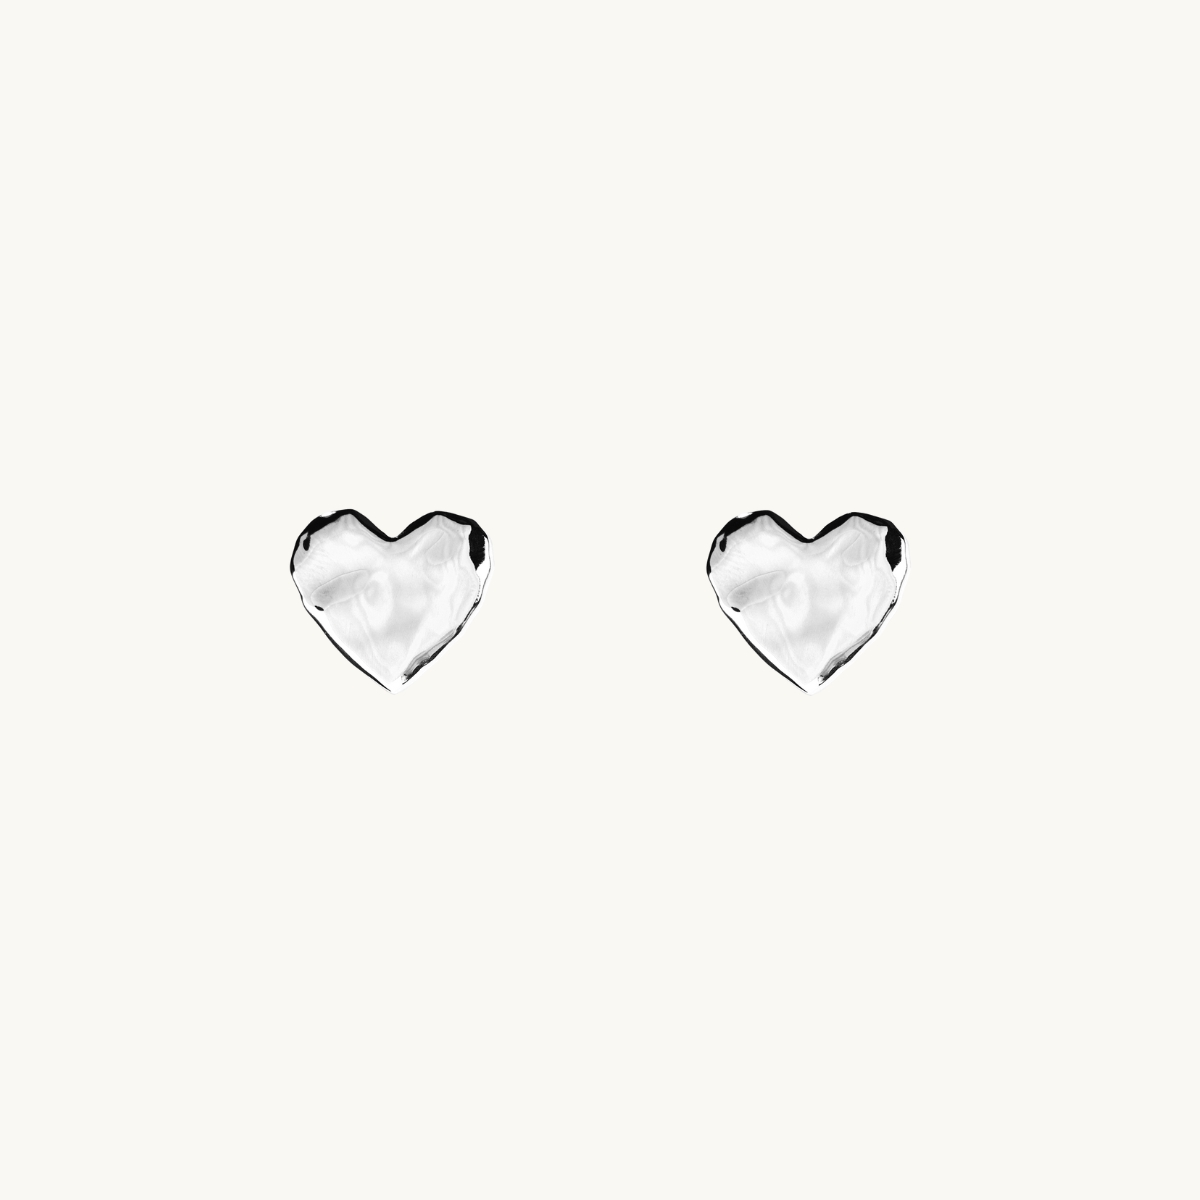 Pin earrings in silver in shape of a heart with an organic shape